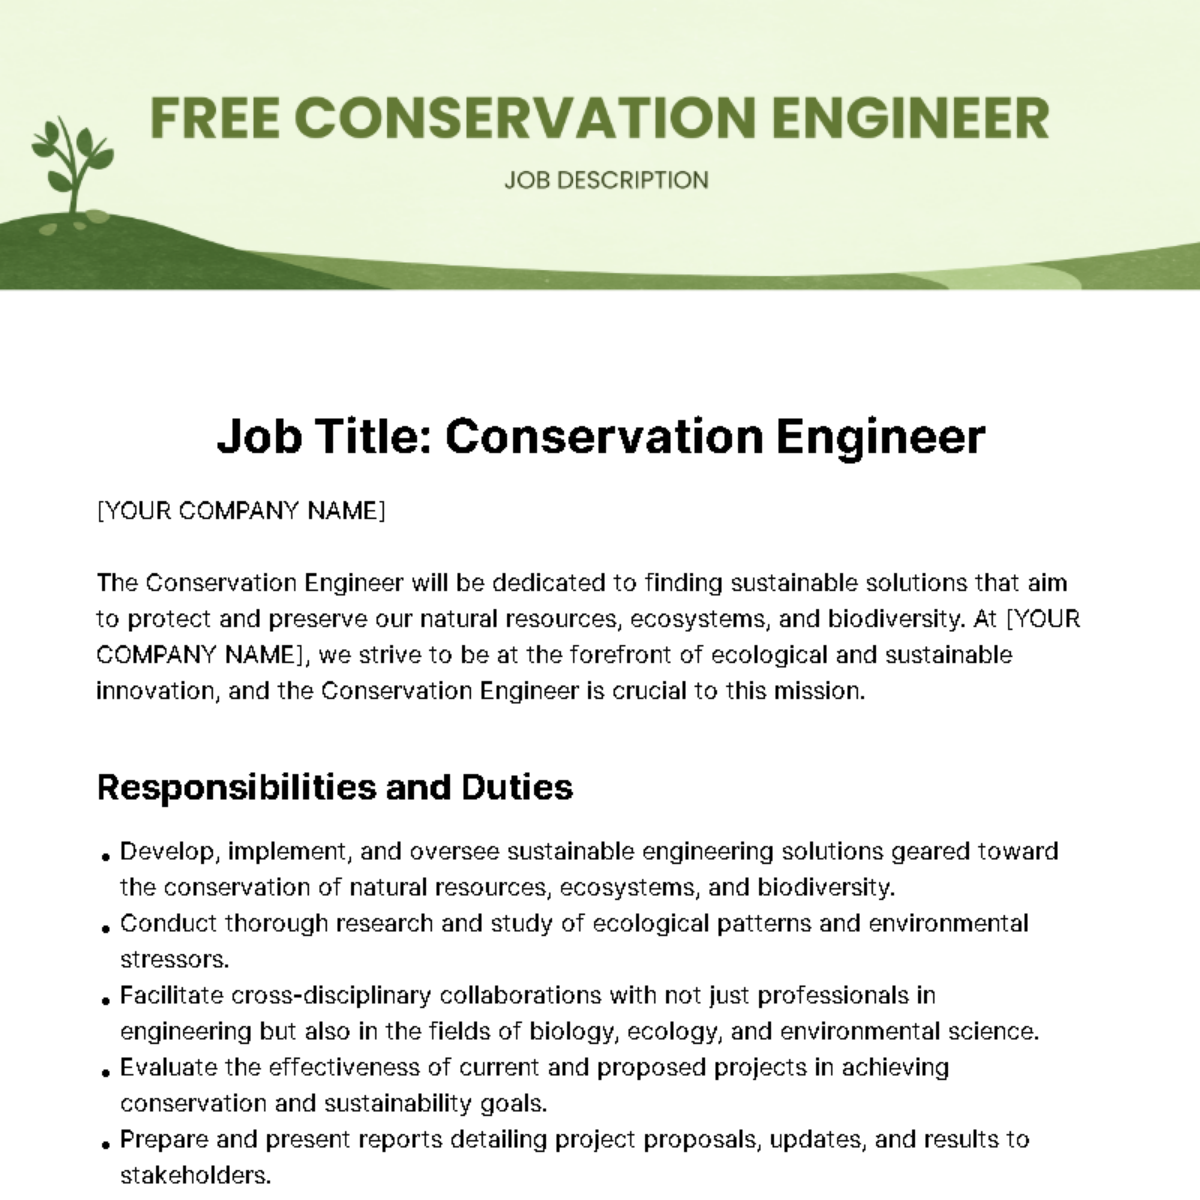 Free Conservation Engineer Job Description Template